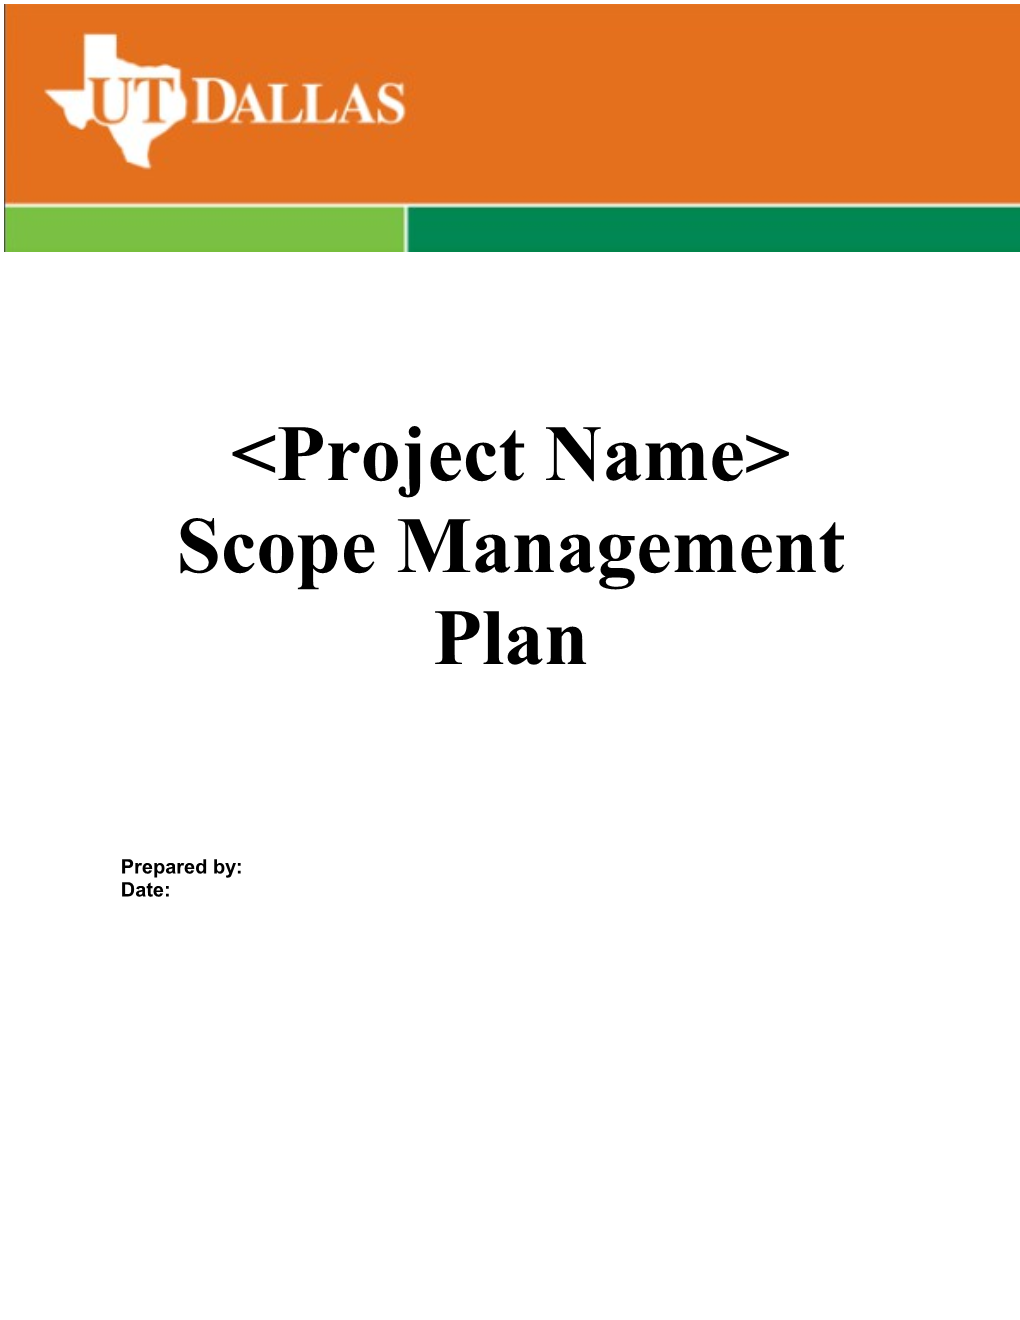 Scope Management Plan Template